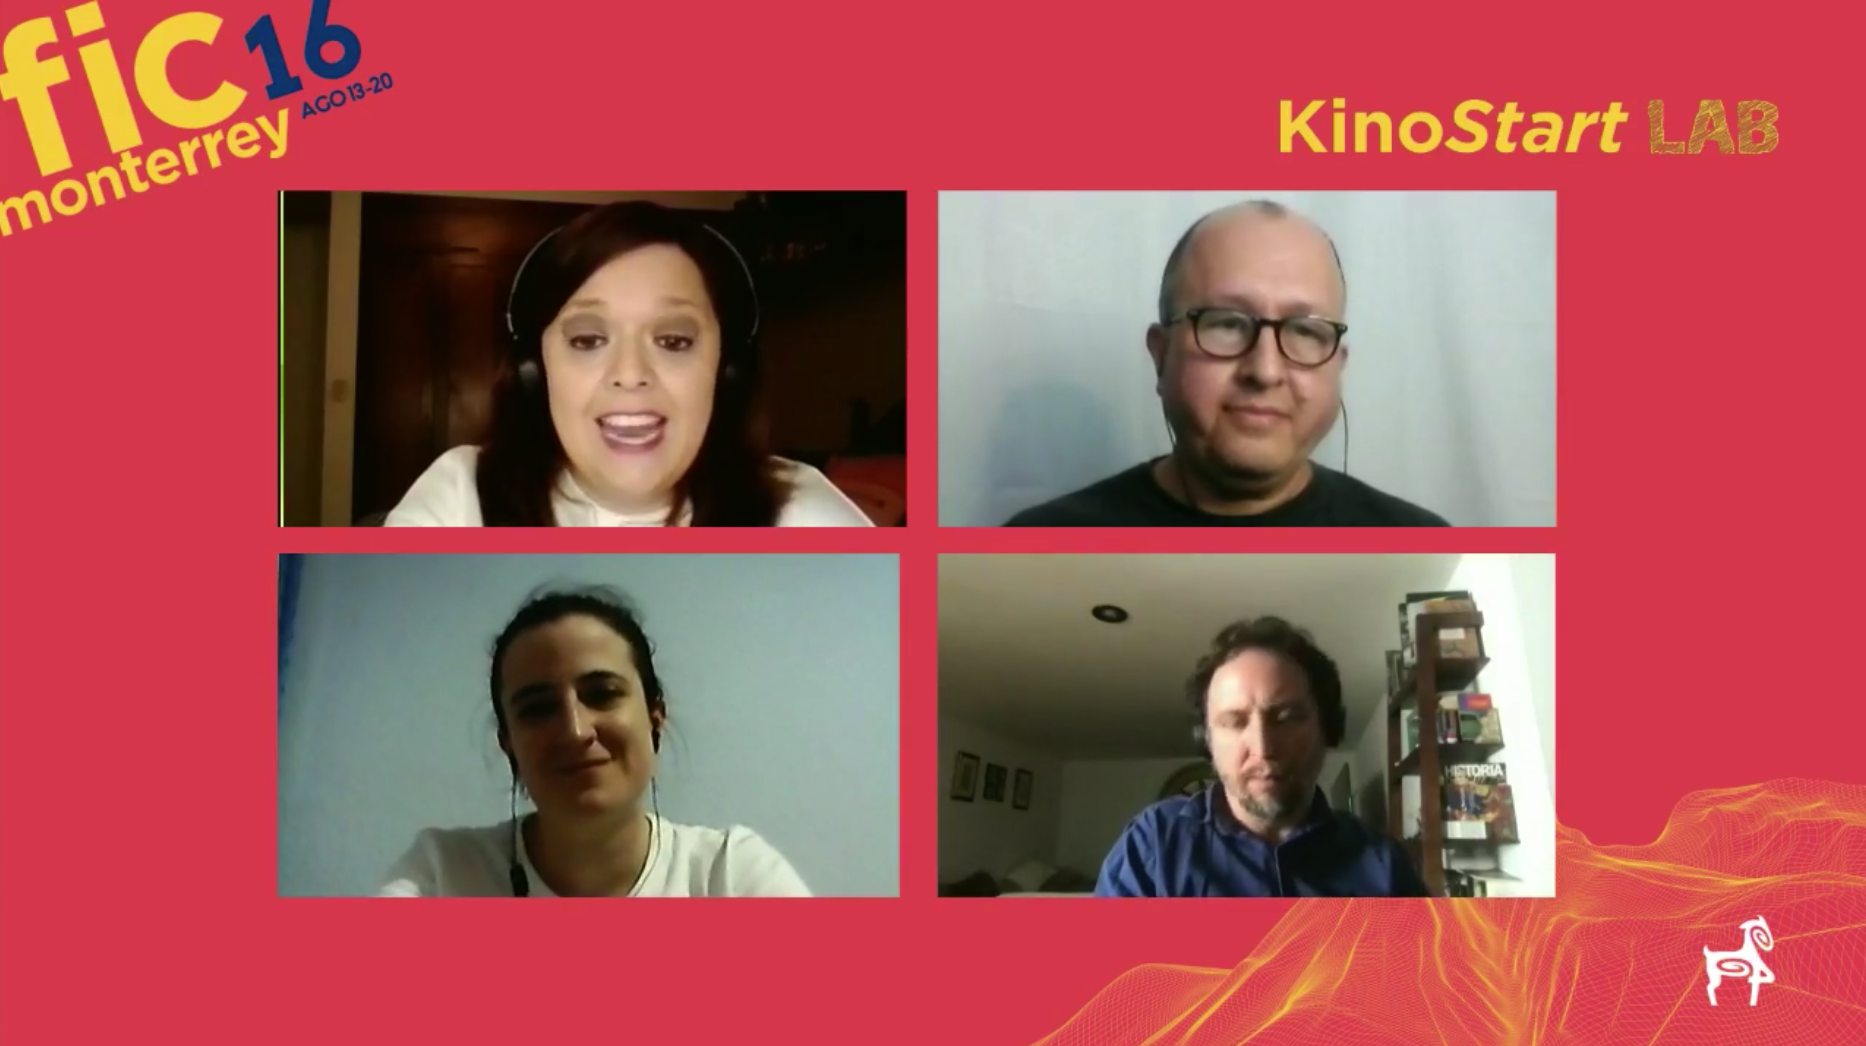 Screenwriters share their experiences at KinoStart LAB of Ficmonterrey